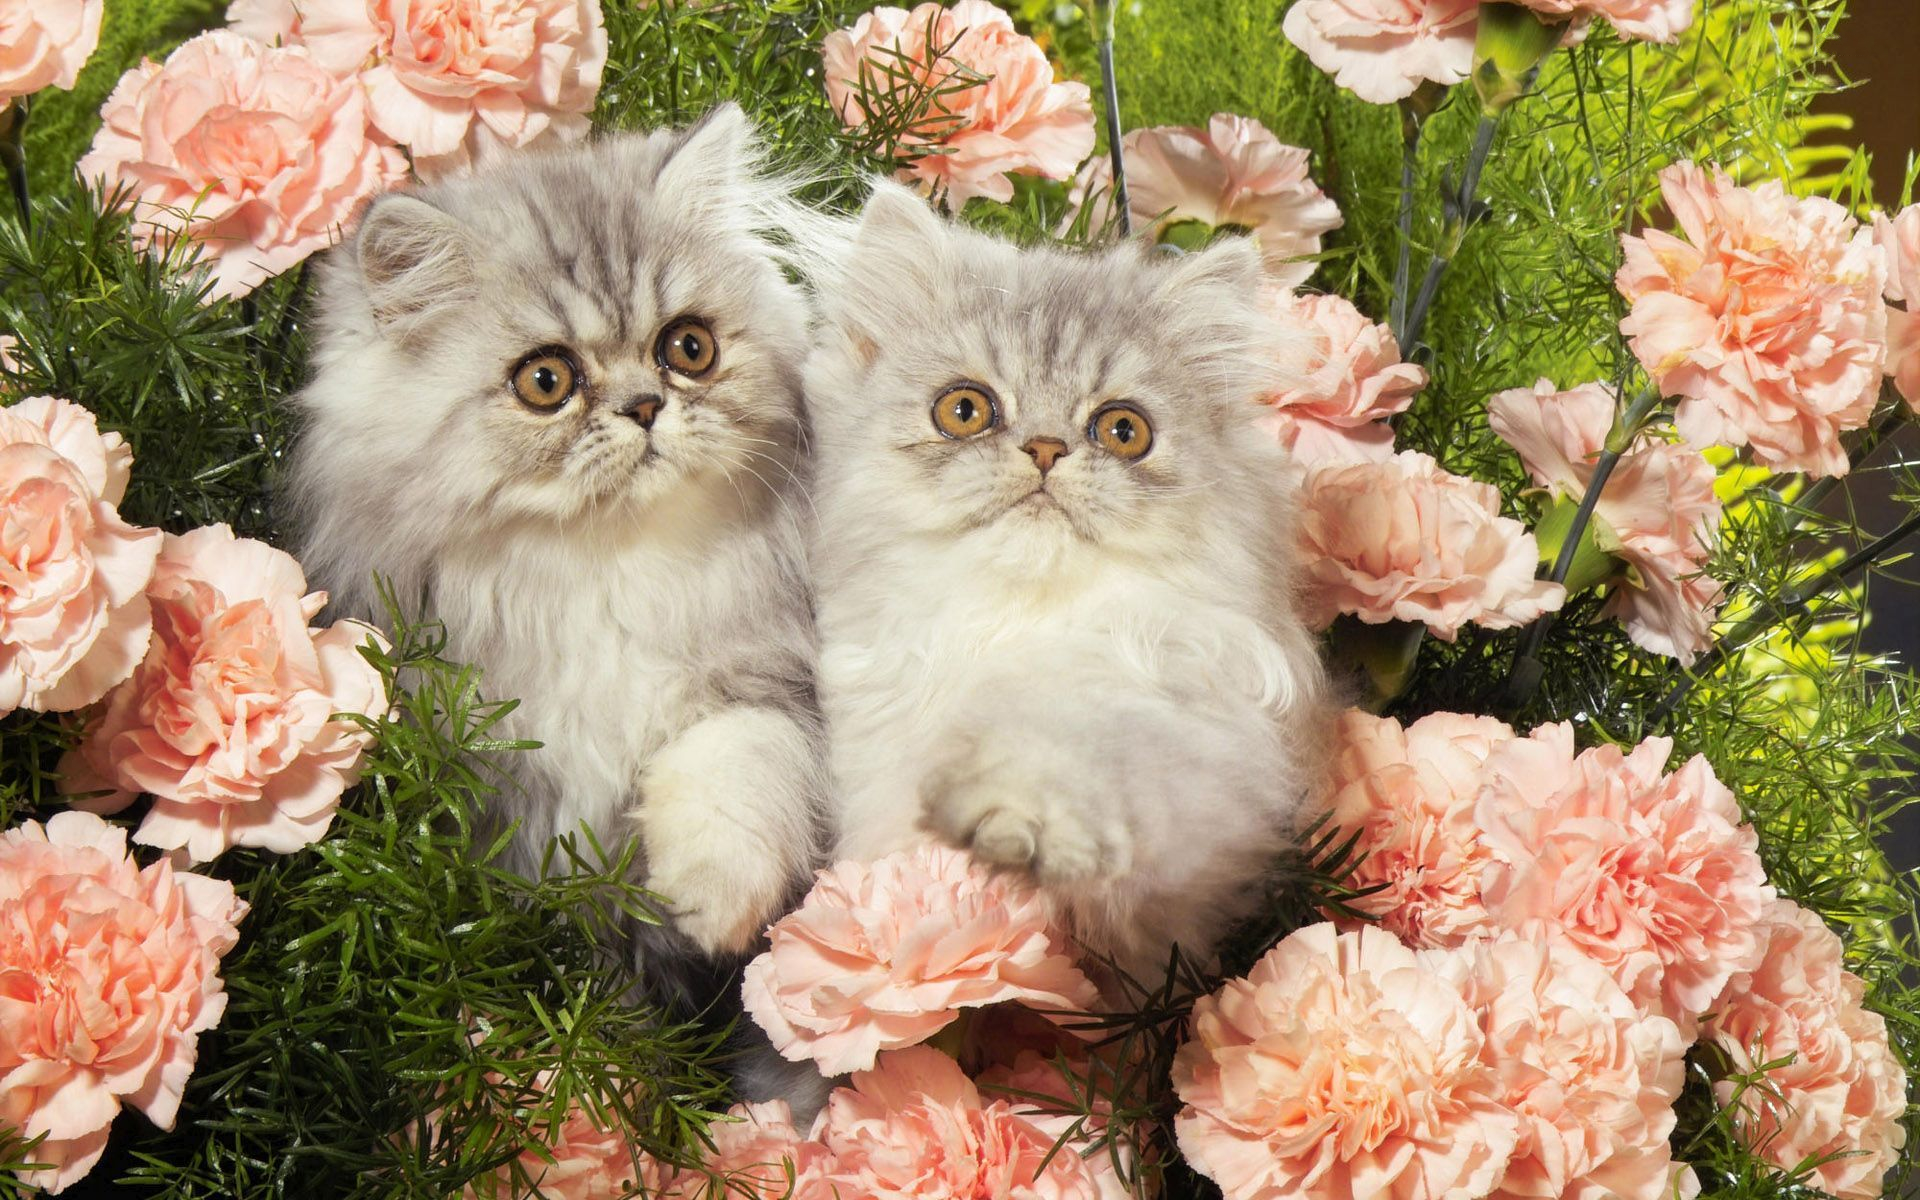 397245 descargar imagen animales, gato, bebe animal, clavel, flor, esponjoso, gatito, gato persa, flor rosa, gatos: fondos de pantalla y protectores de pantalla gratis